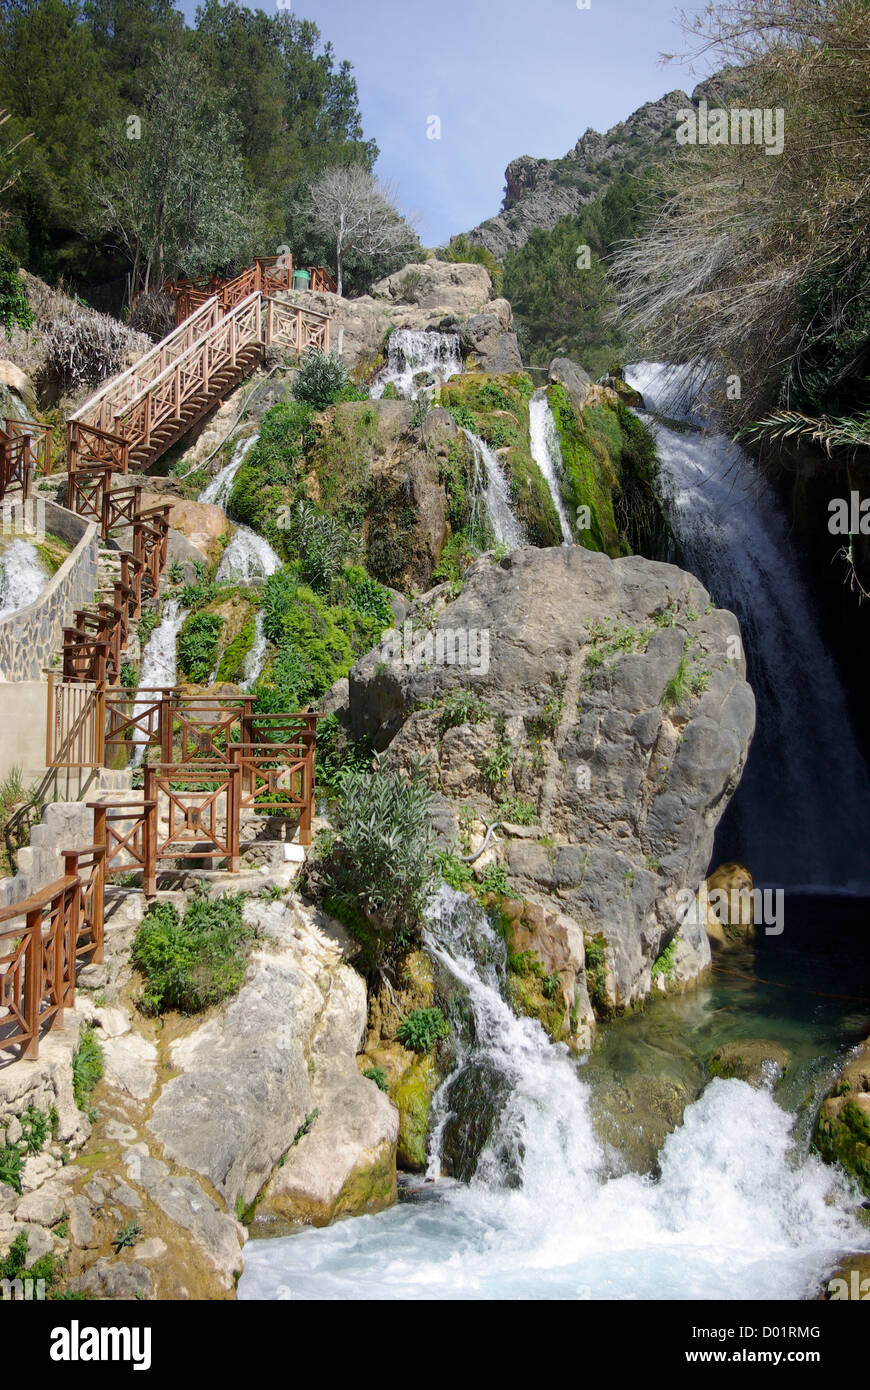 Fonts d'Algar (Waterfalls of Algar) near Callosa d'en Sarrià, Spain Stock Photo